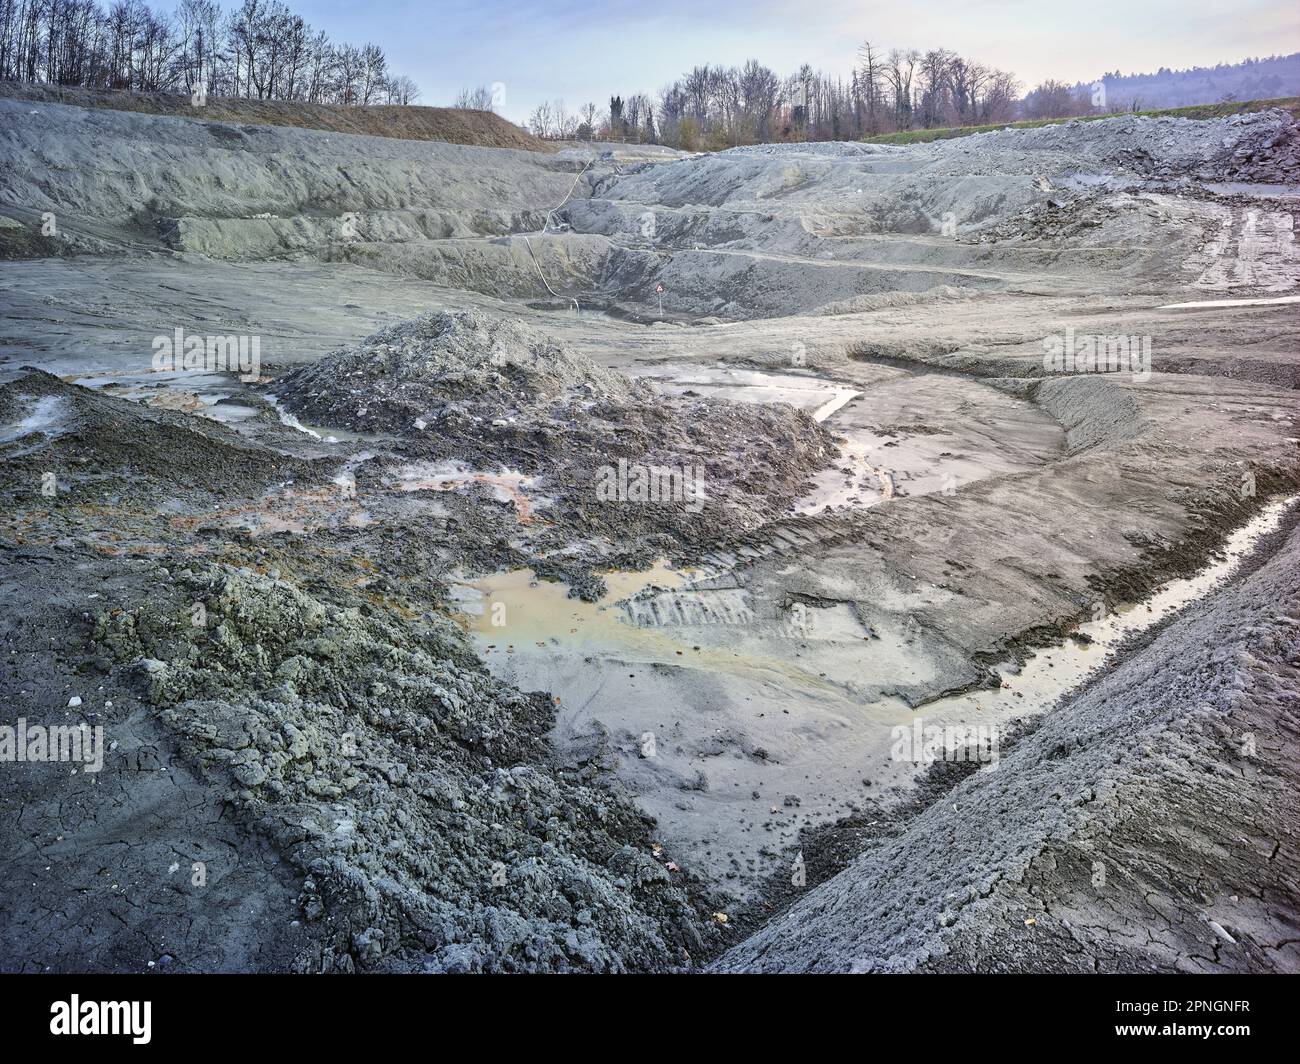 Estrazione di argilla in una fossa di argilla, nei pressi di Schlatt Svizzera Foto Stock